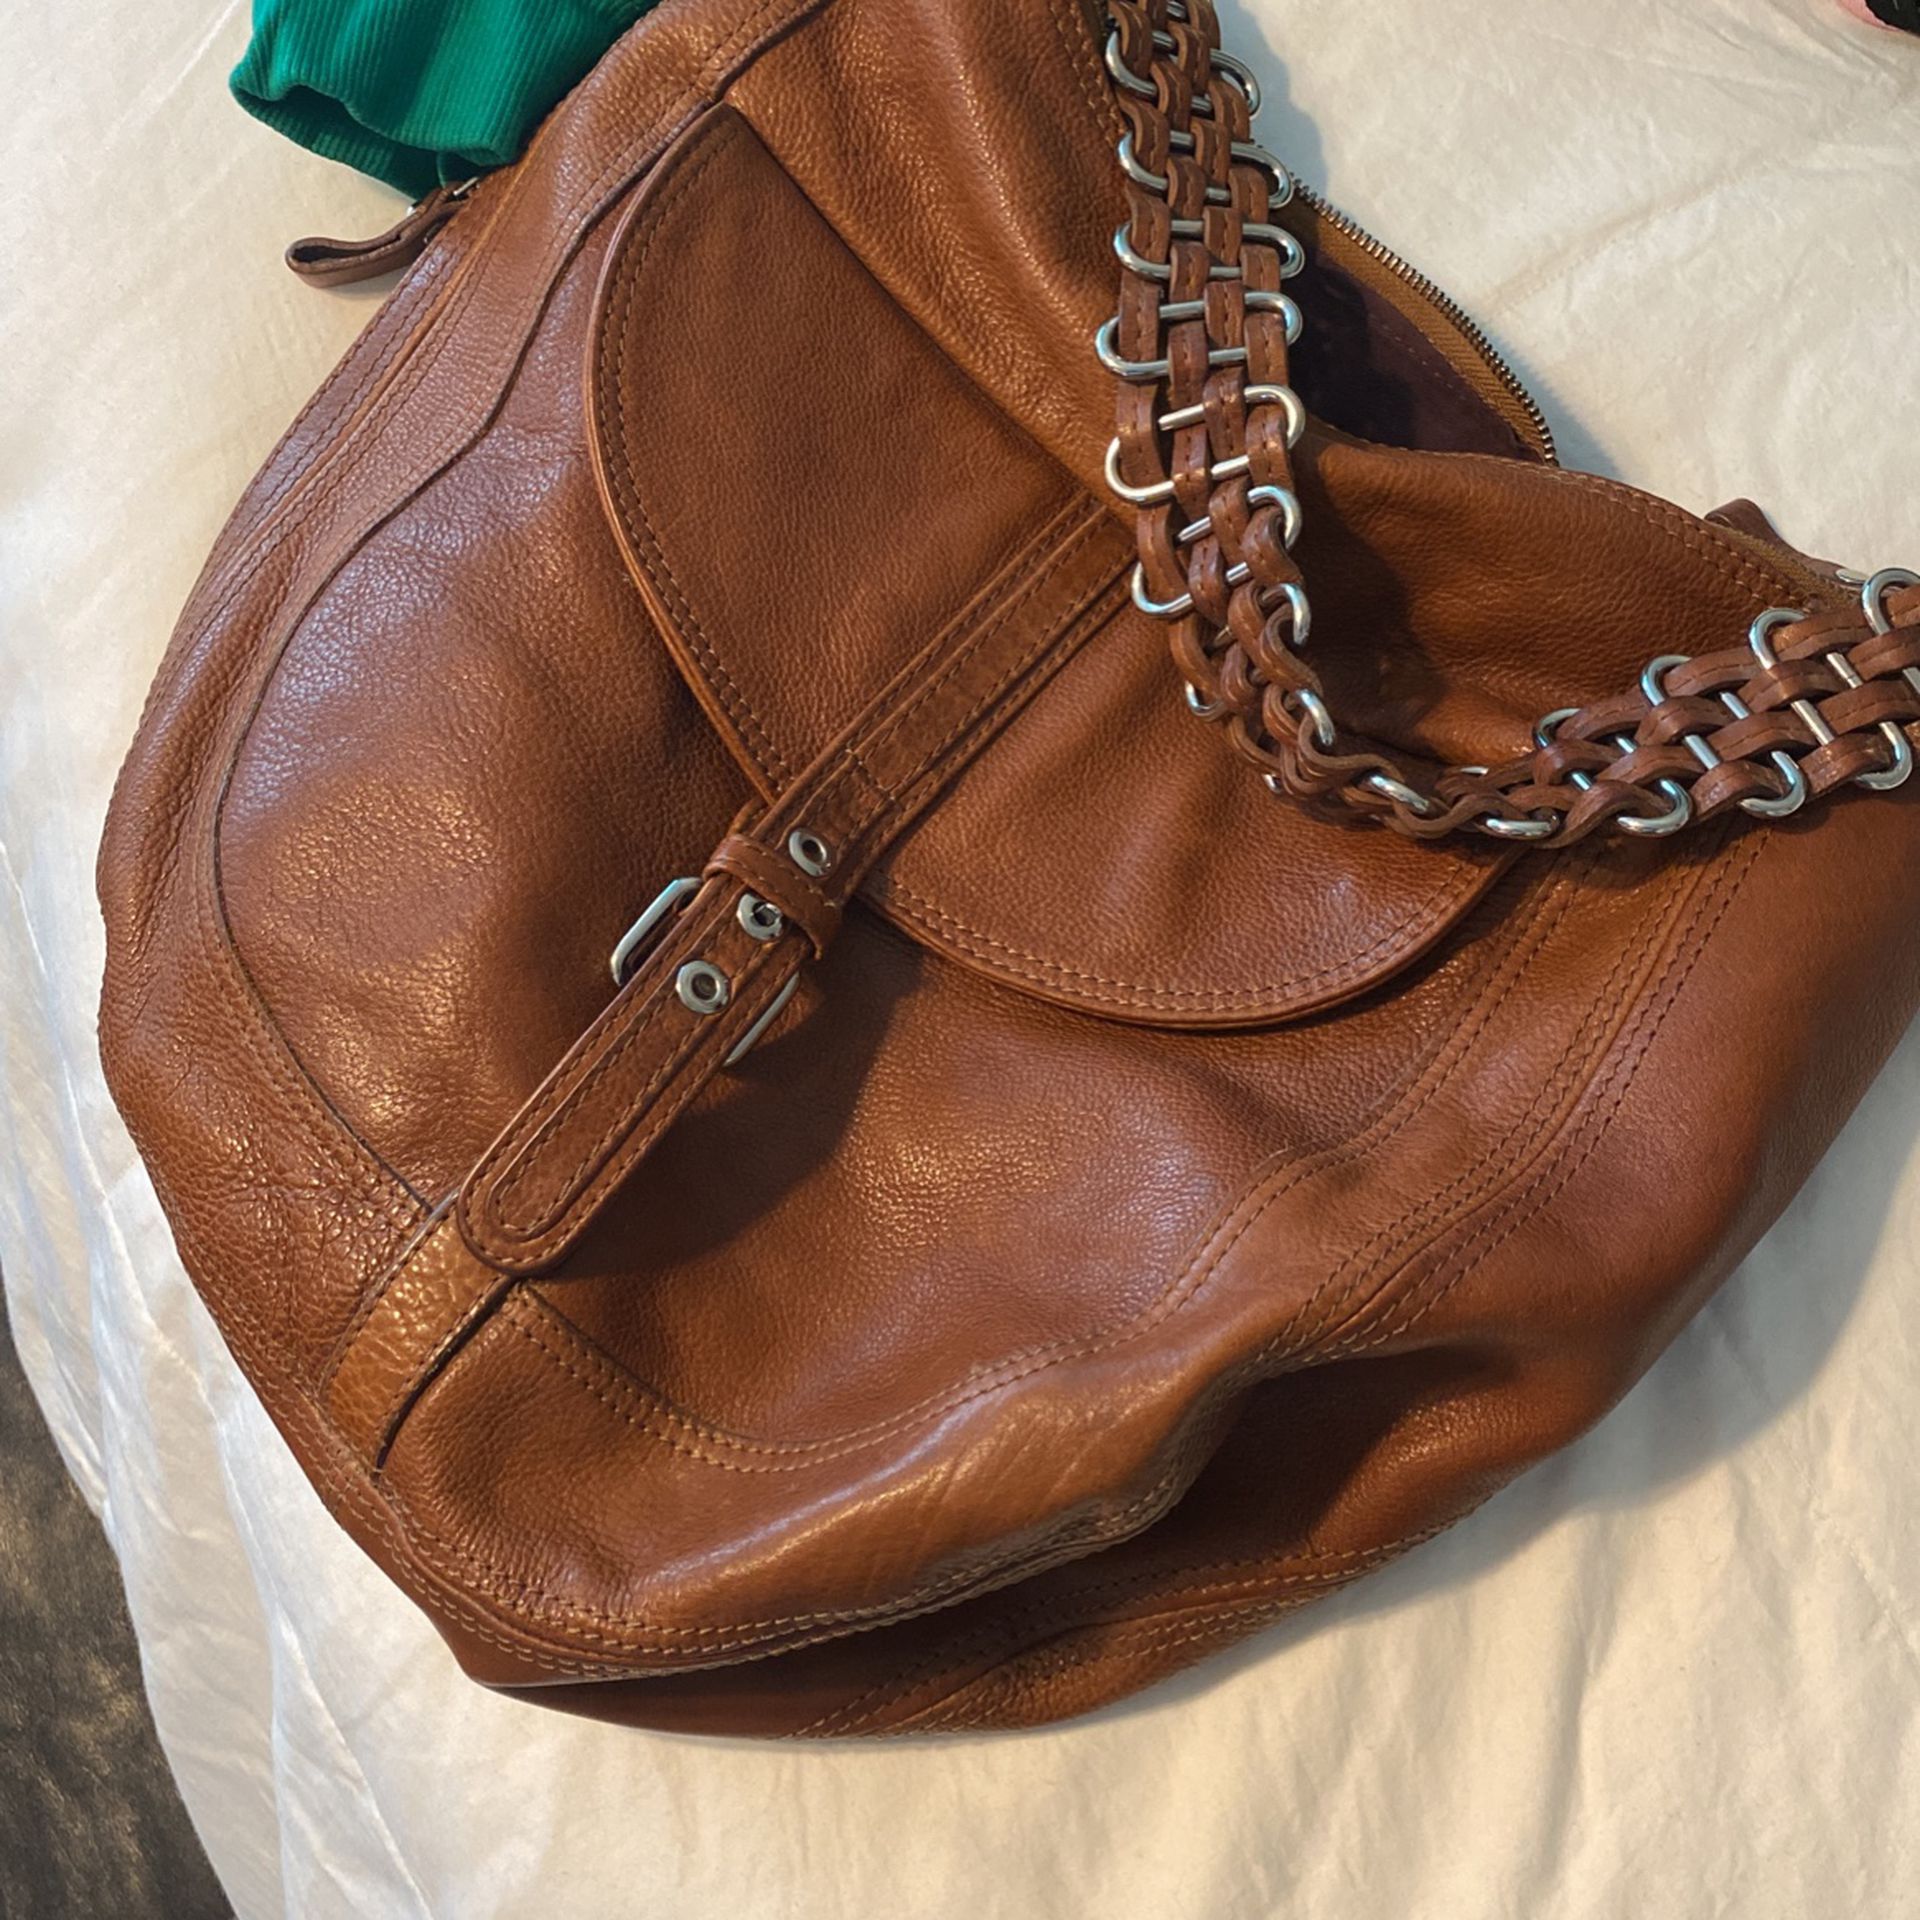 Used Brown Thick Leather Hobo Bag